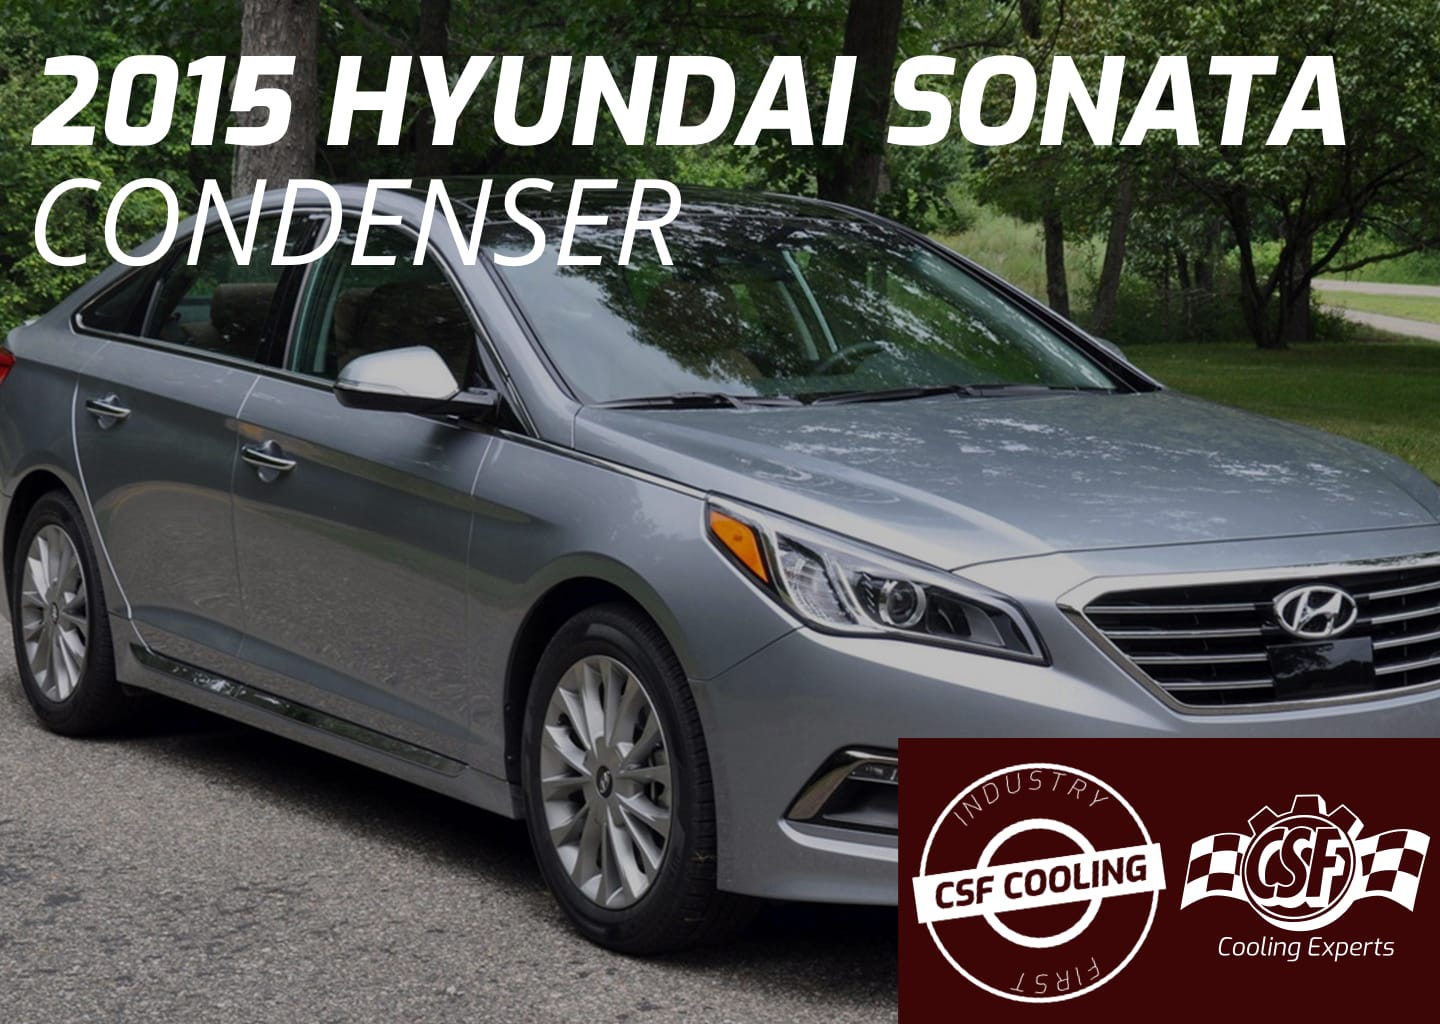 New Hyundai Sonata Condenser